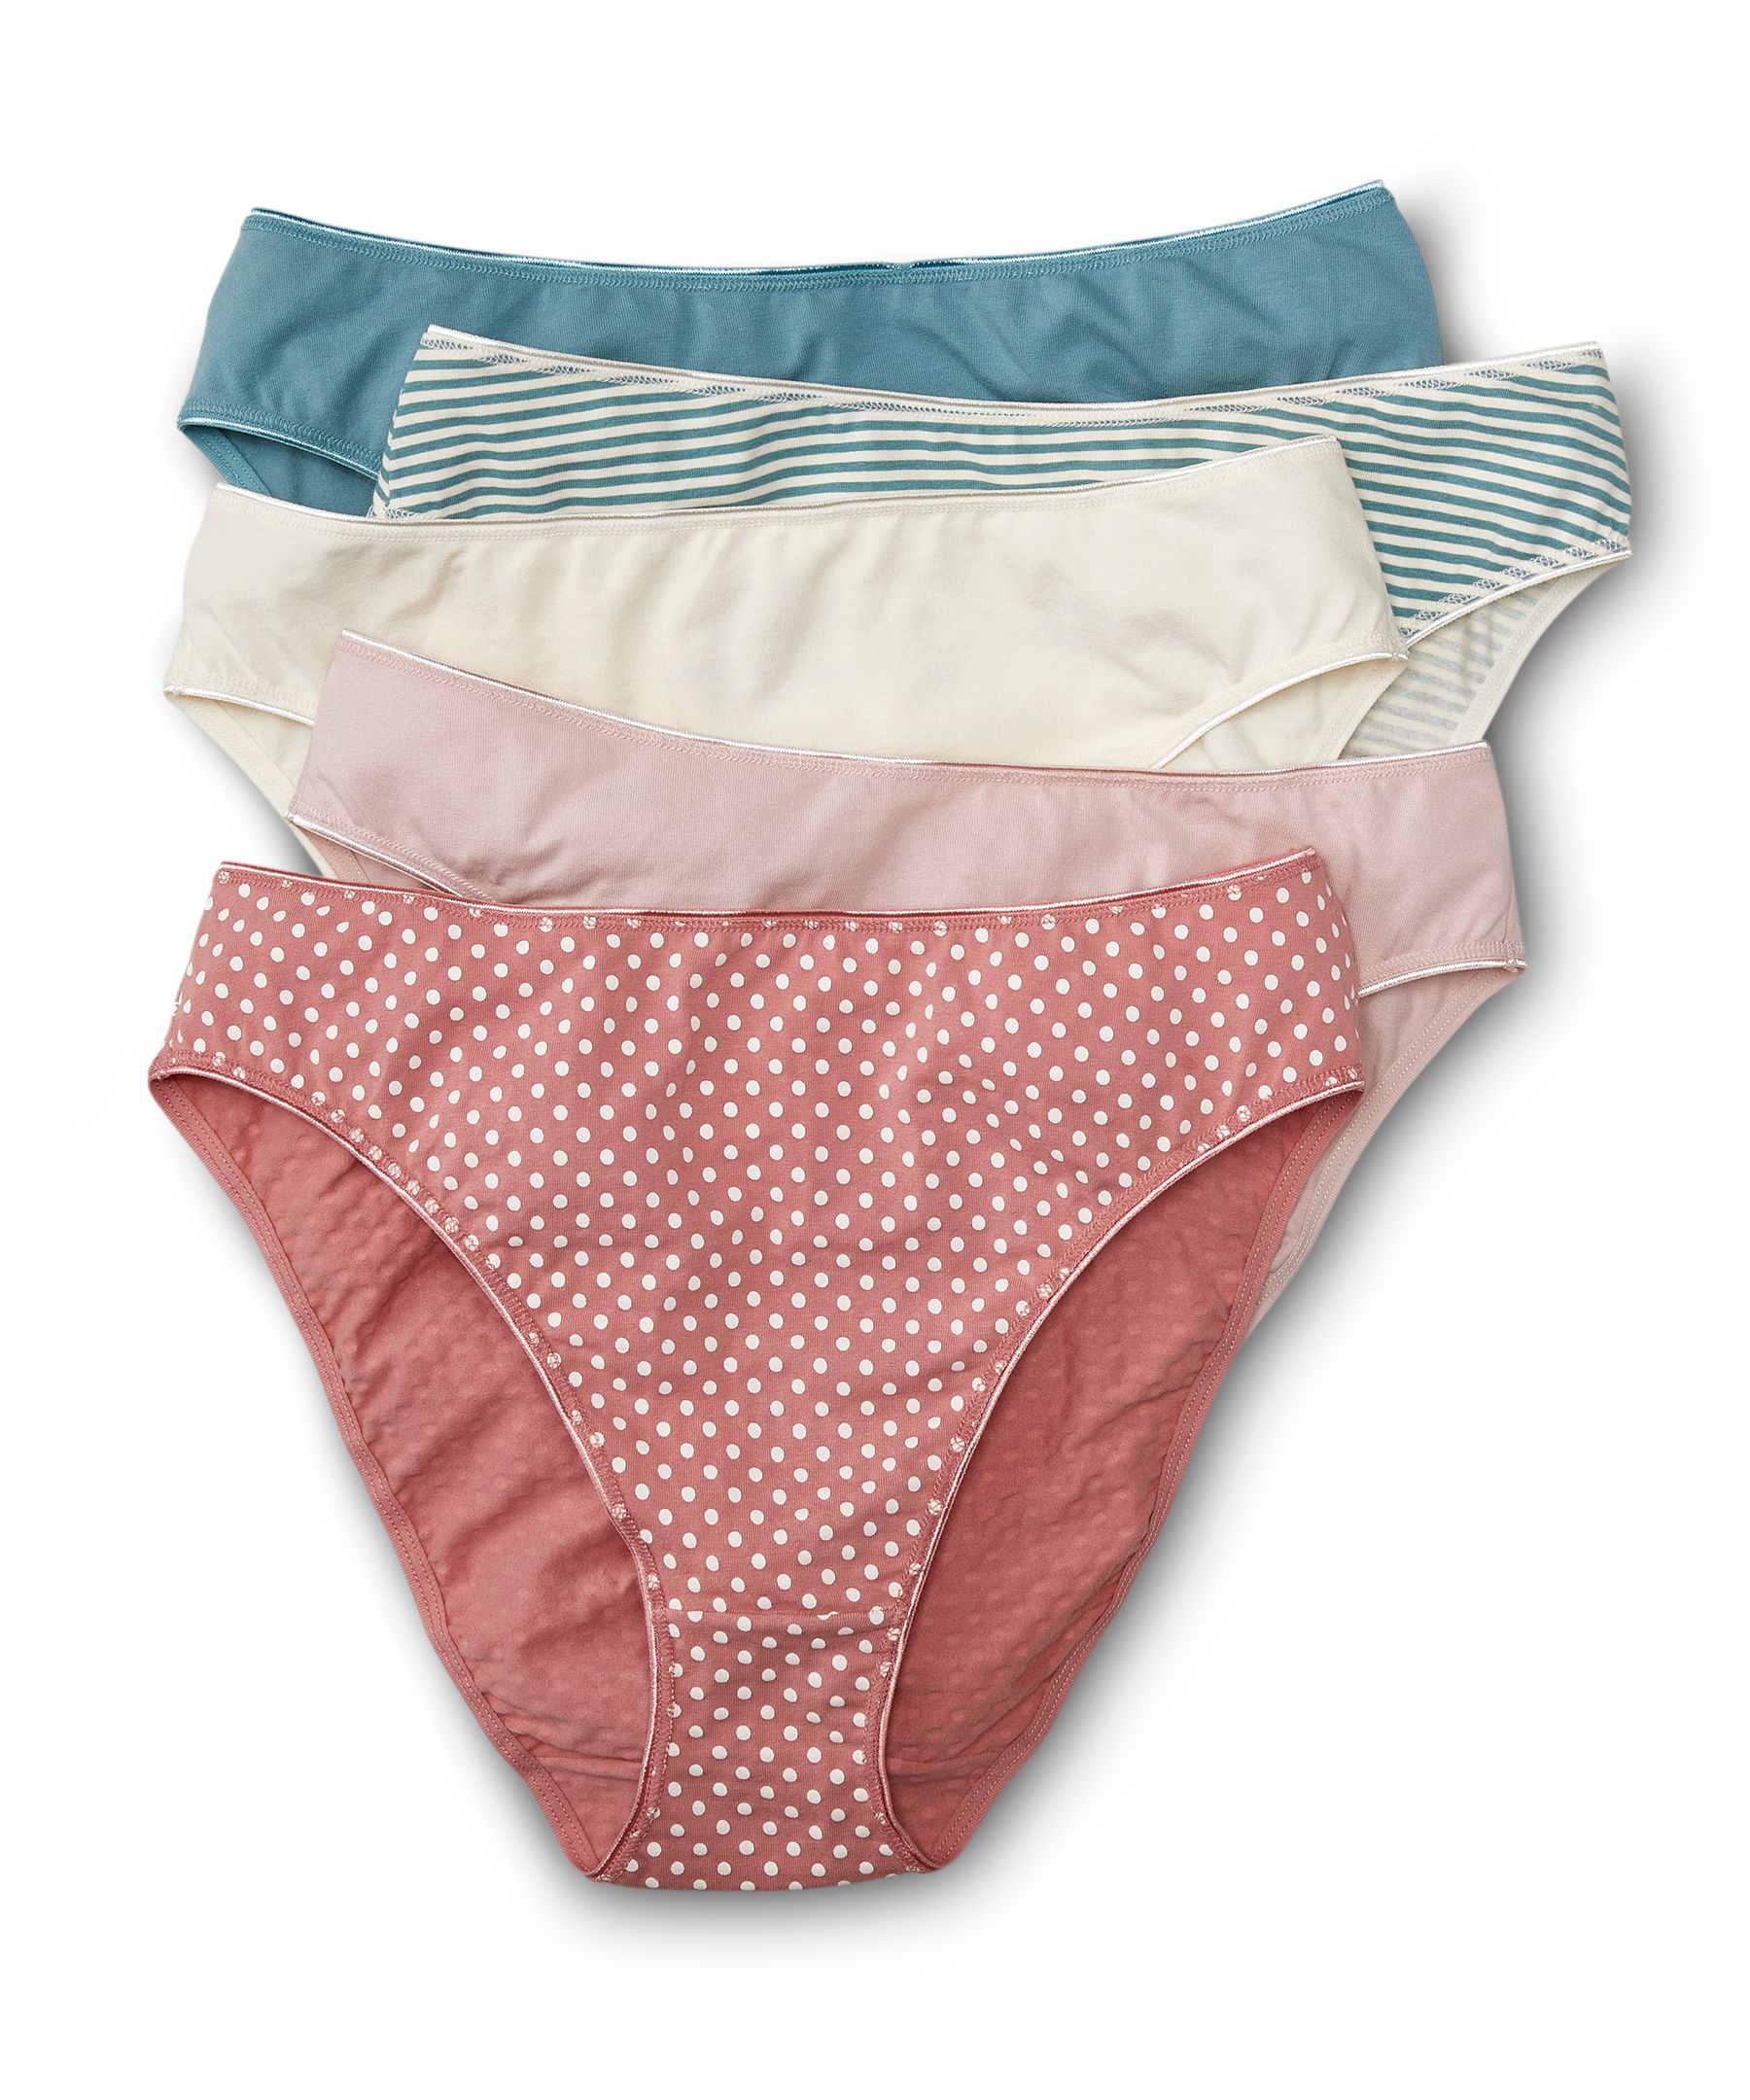 High Cut Panties, Cotton Women Underwear -  Canada